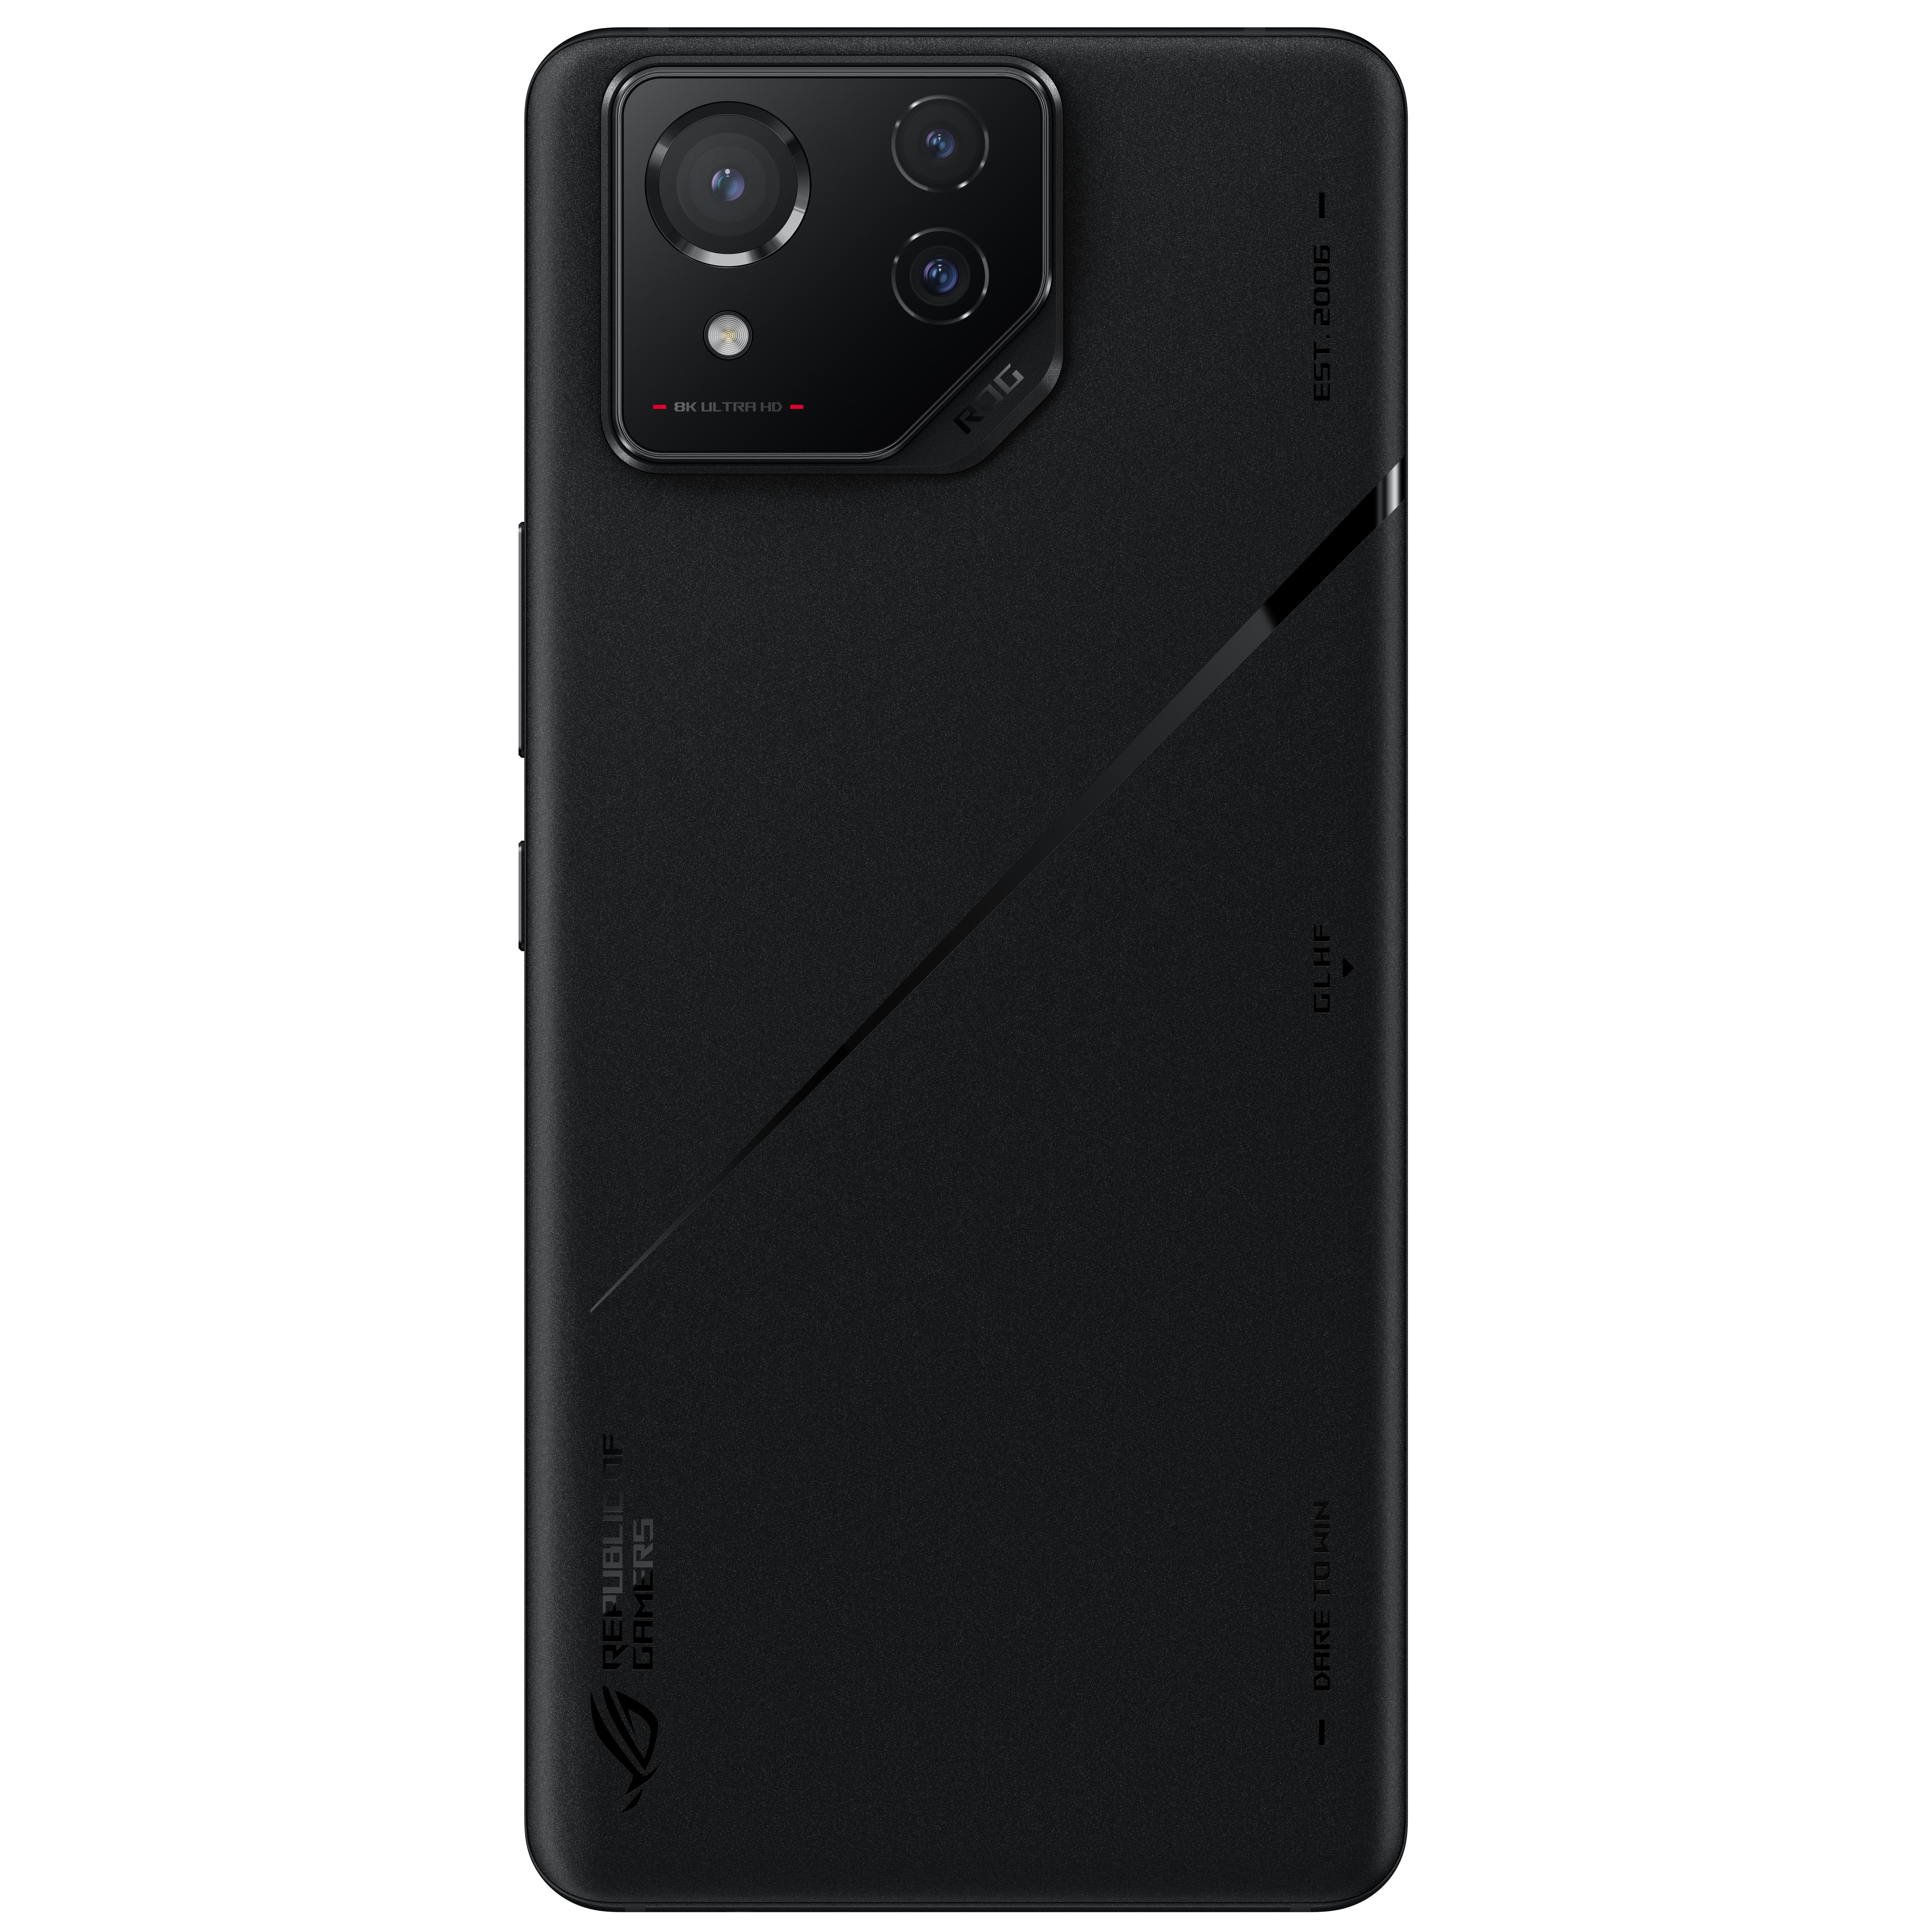 Asus ROG Phone 8/8 Pro review: Display, battery life, charging speed,  speakers